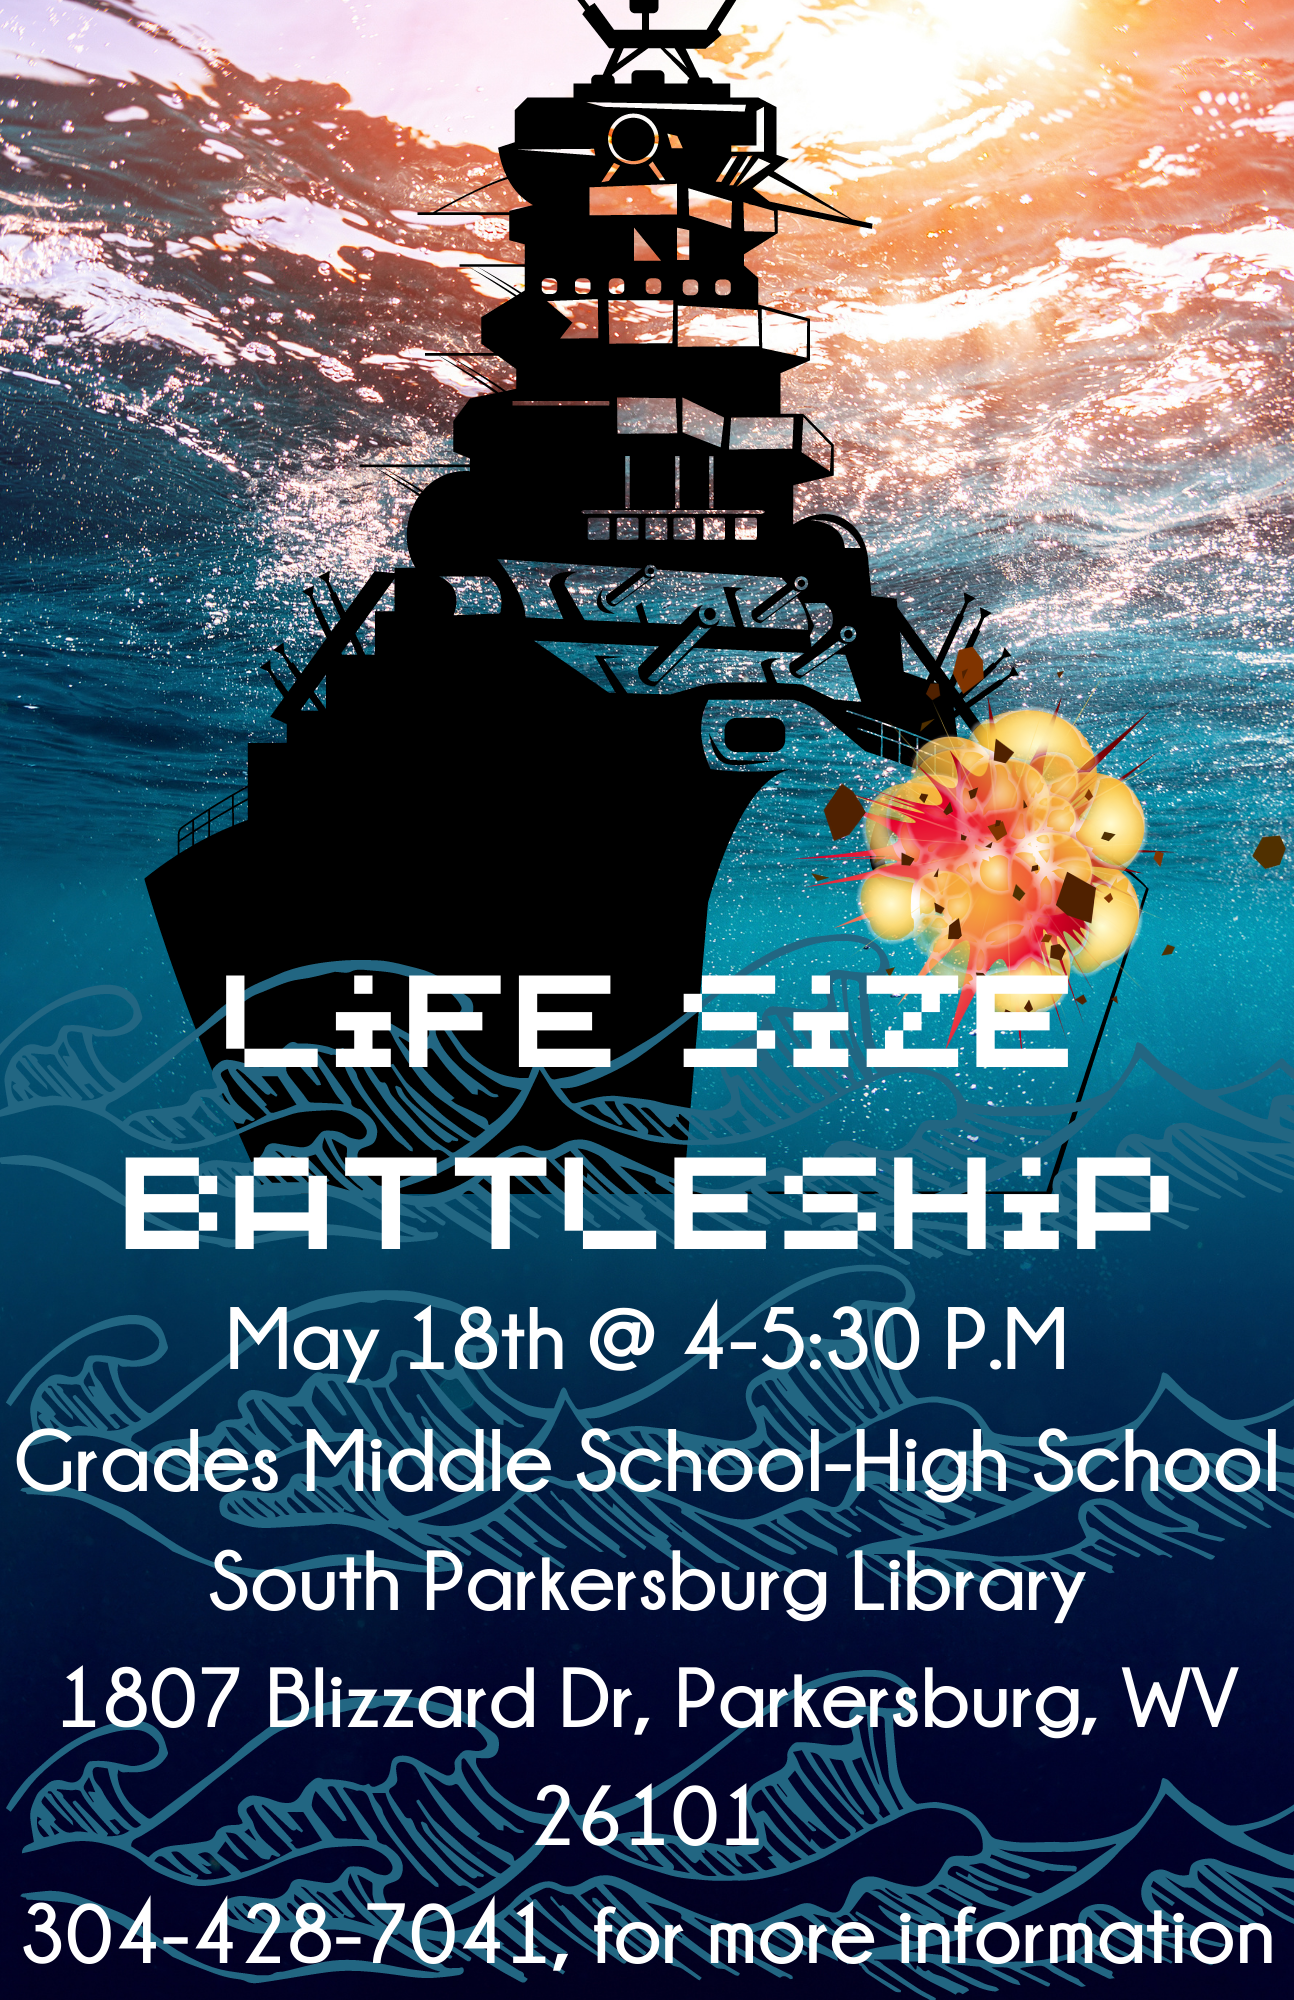 Life-Size Battleship at South Parkersburg